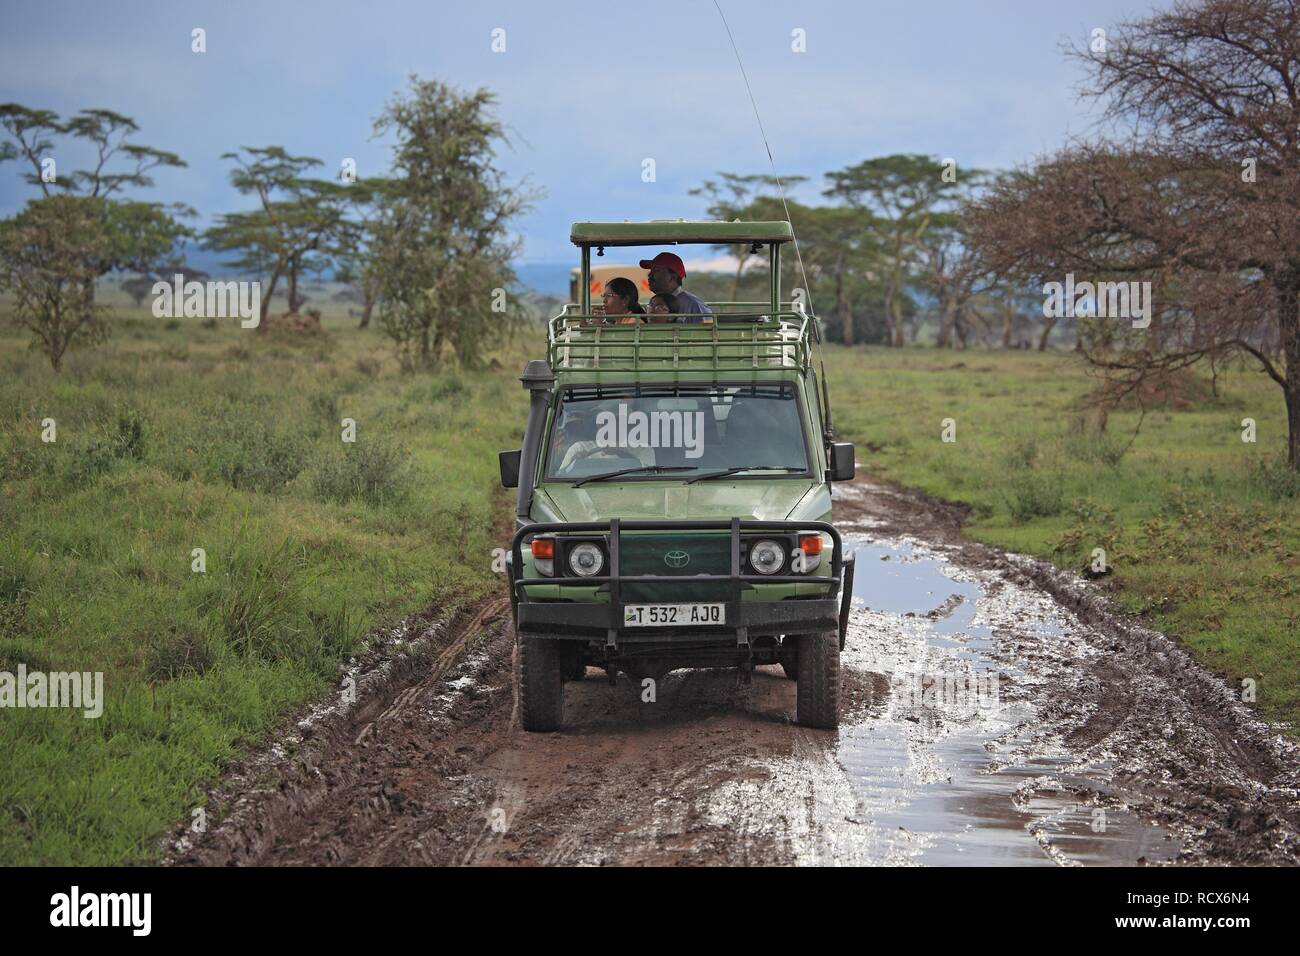 All-terrain vehicle during the rainy season in the Ngorongoro Crater, Serengeti National Park, Tanzania, Africa Stock Photo